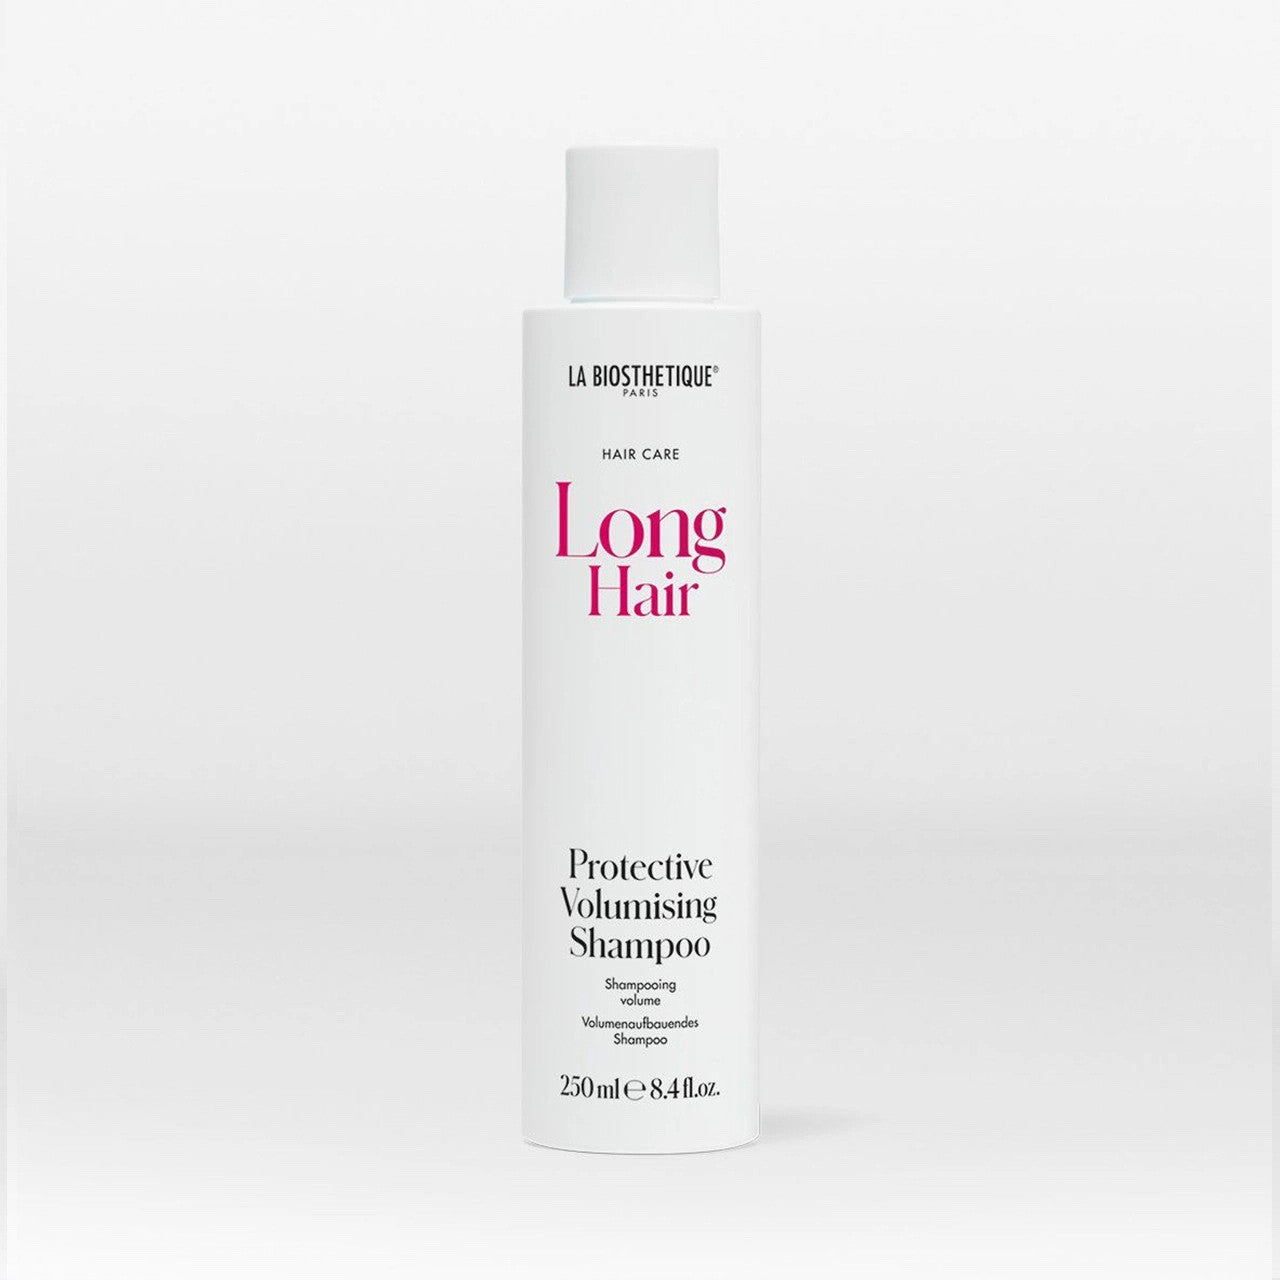 La Biosthetique's Long Hair Protective Volumising Shampoo 250ml